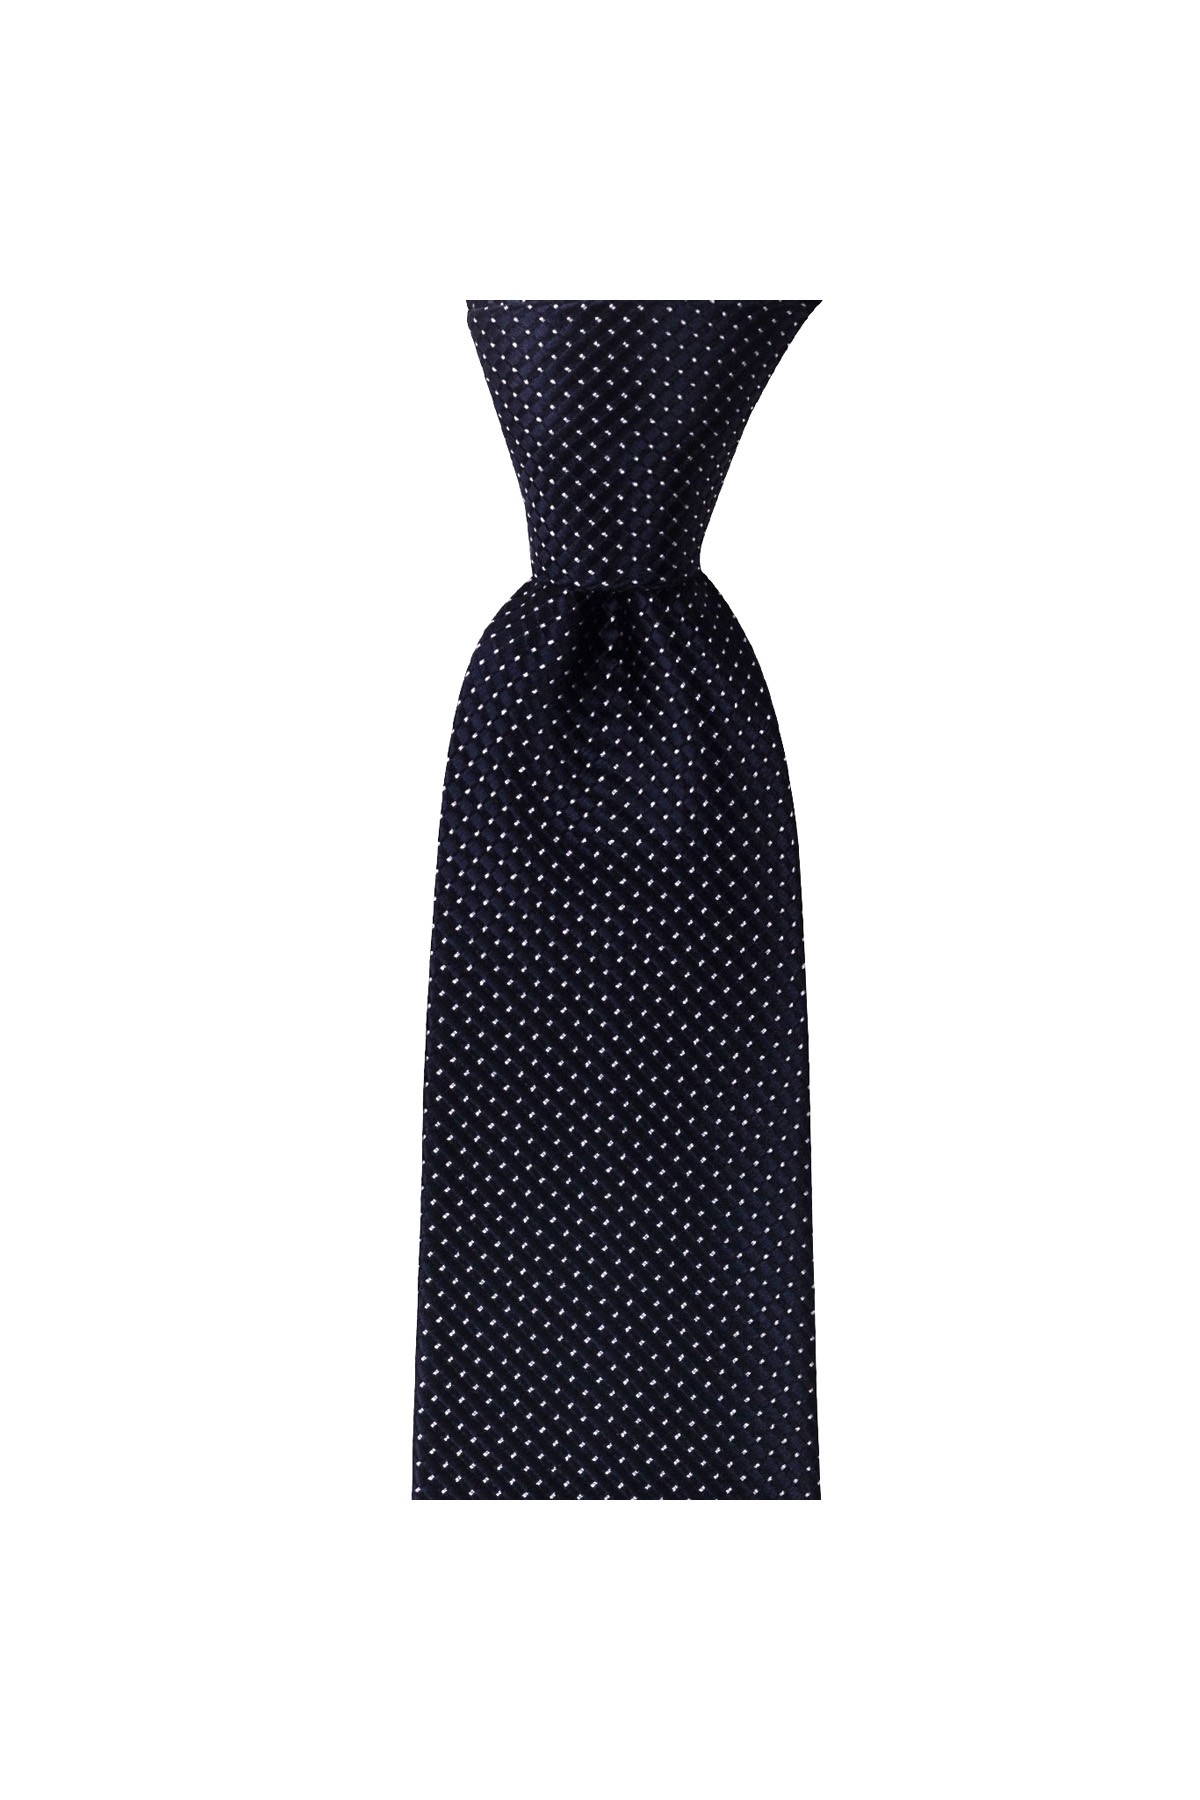 Klasik 8 cm genişliğinde mendilli kravat - Lacivert